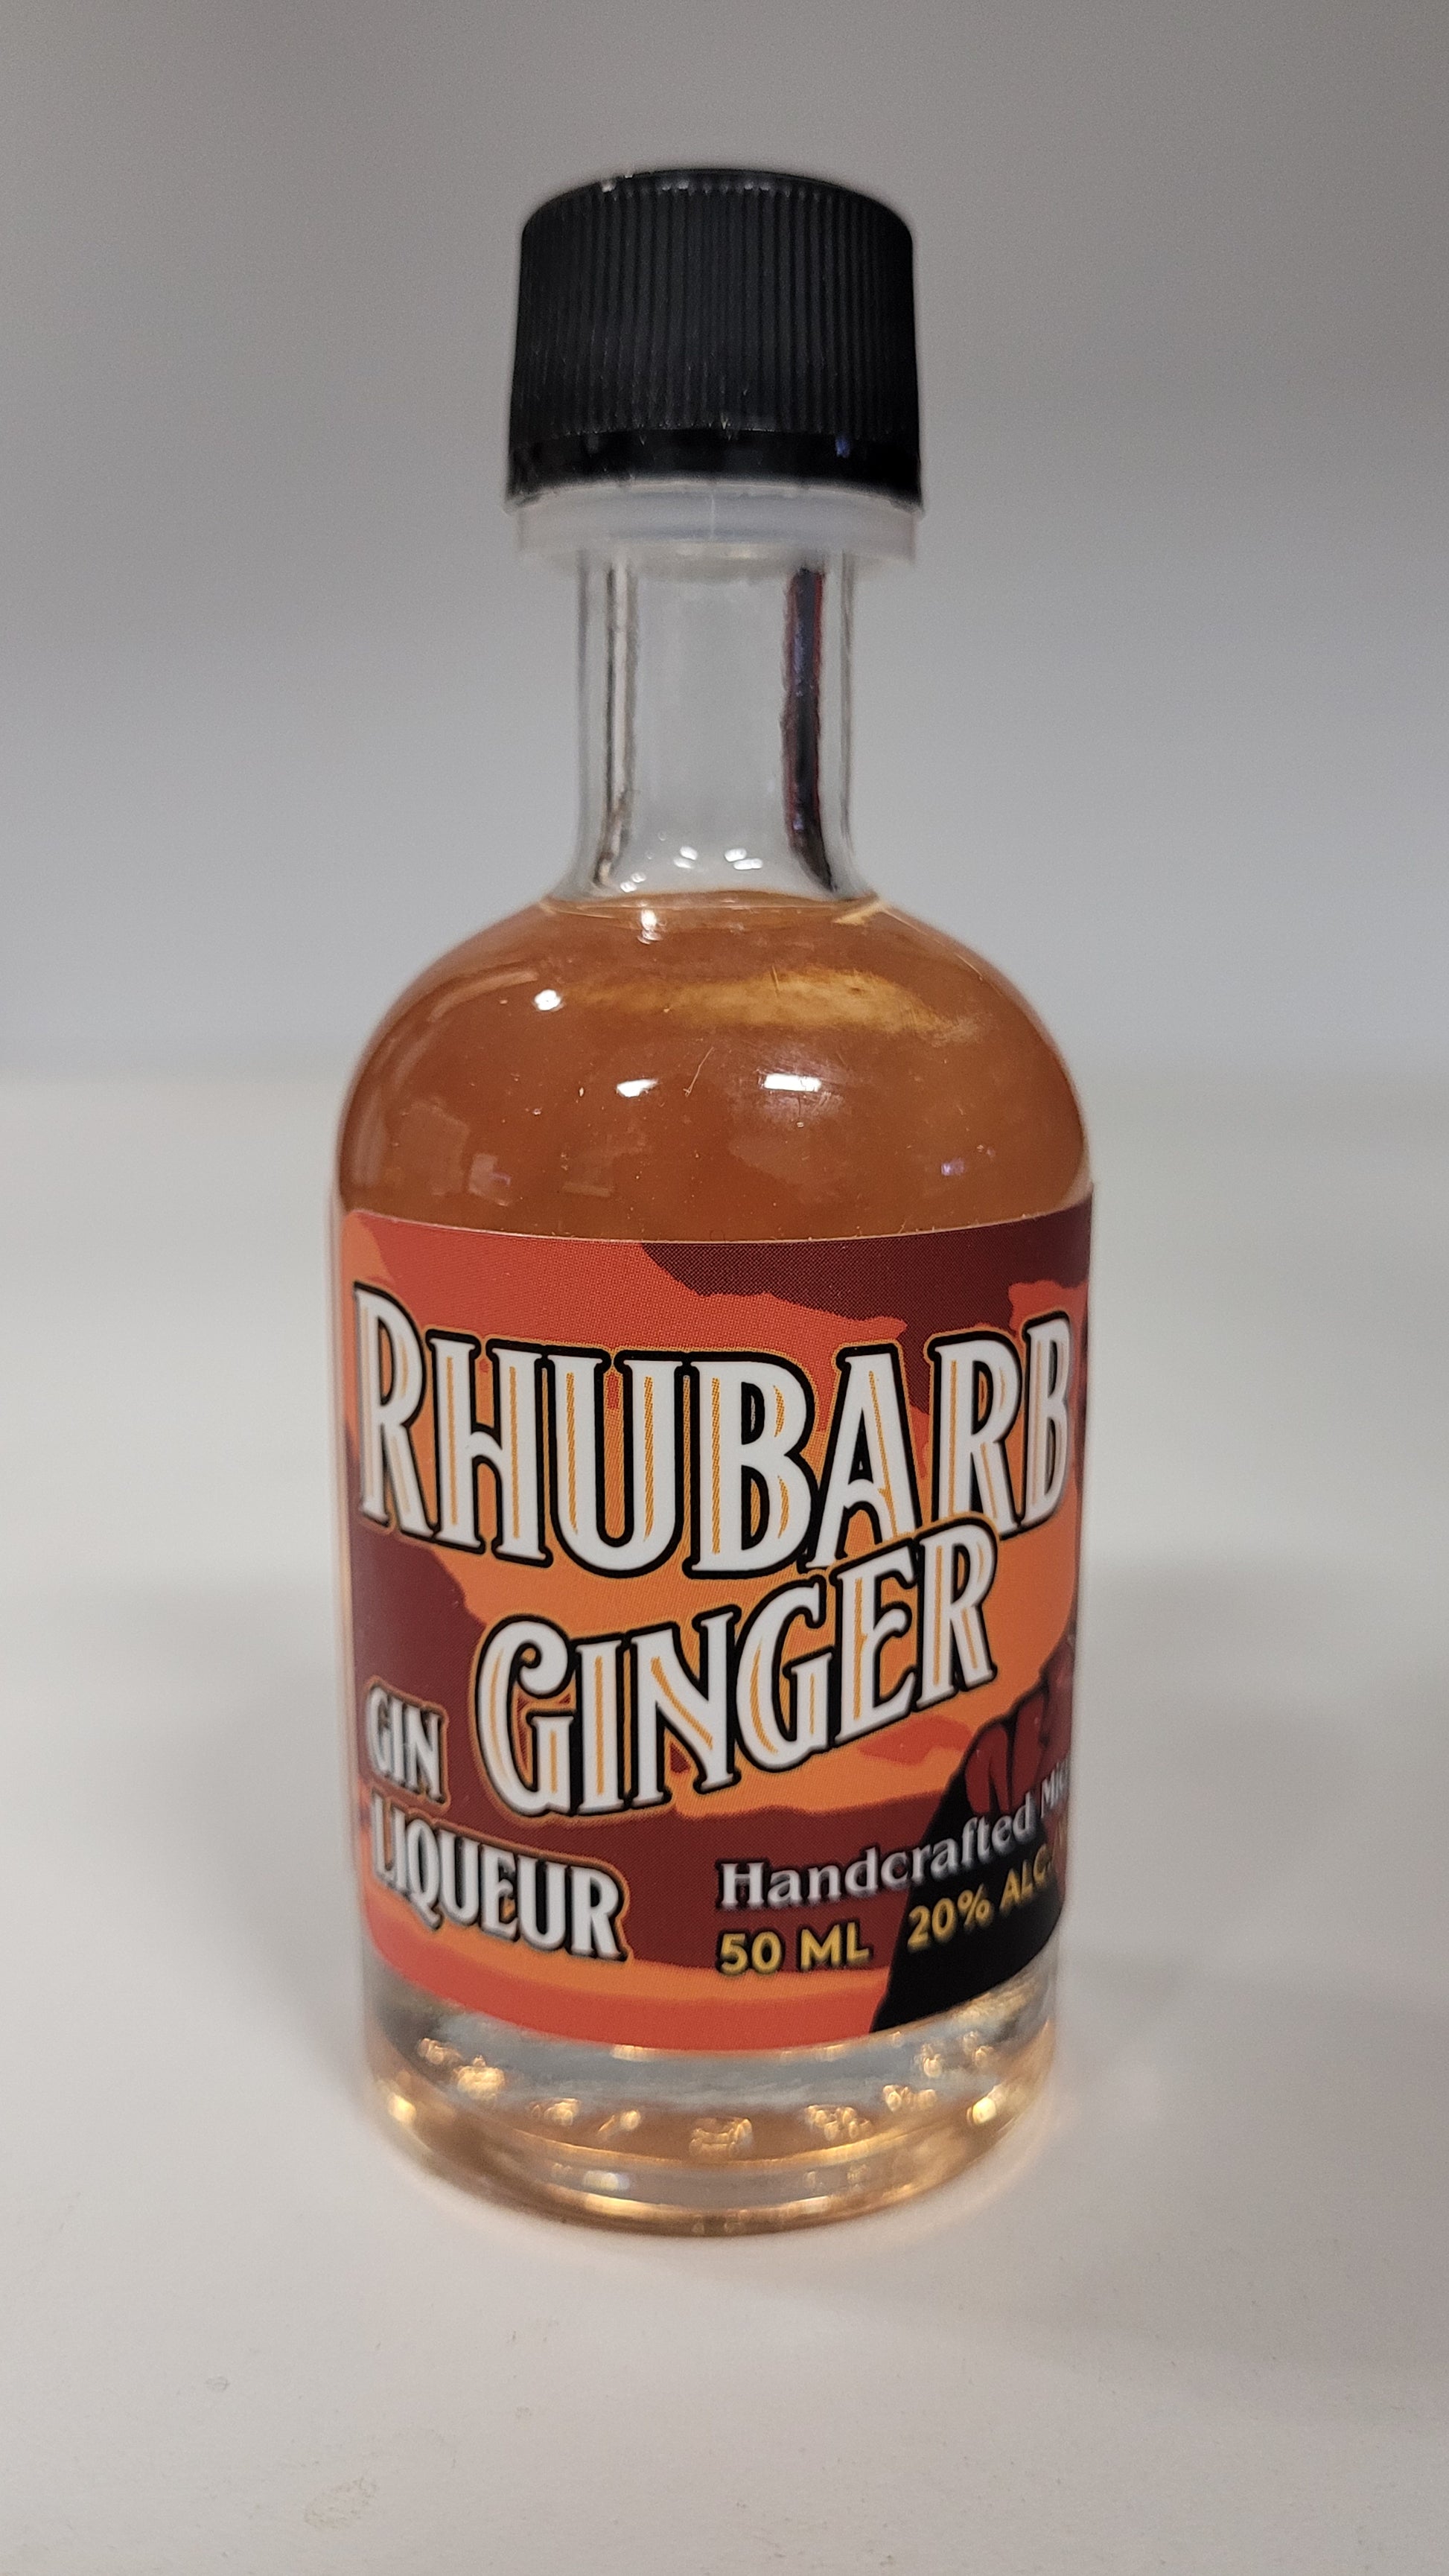 Single-serving 50ml rhubarb ginger gin liqueur.